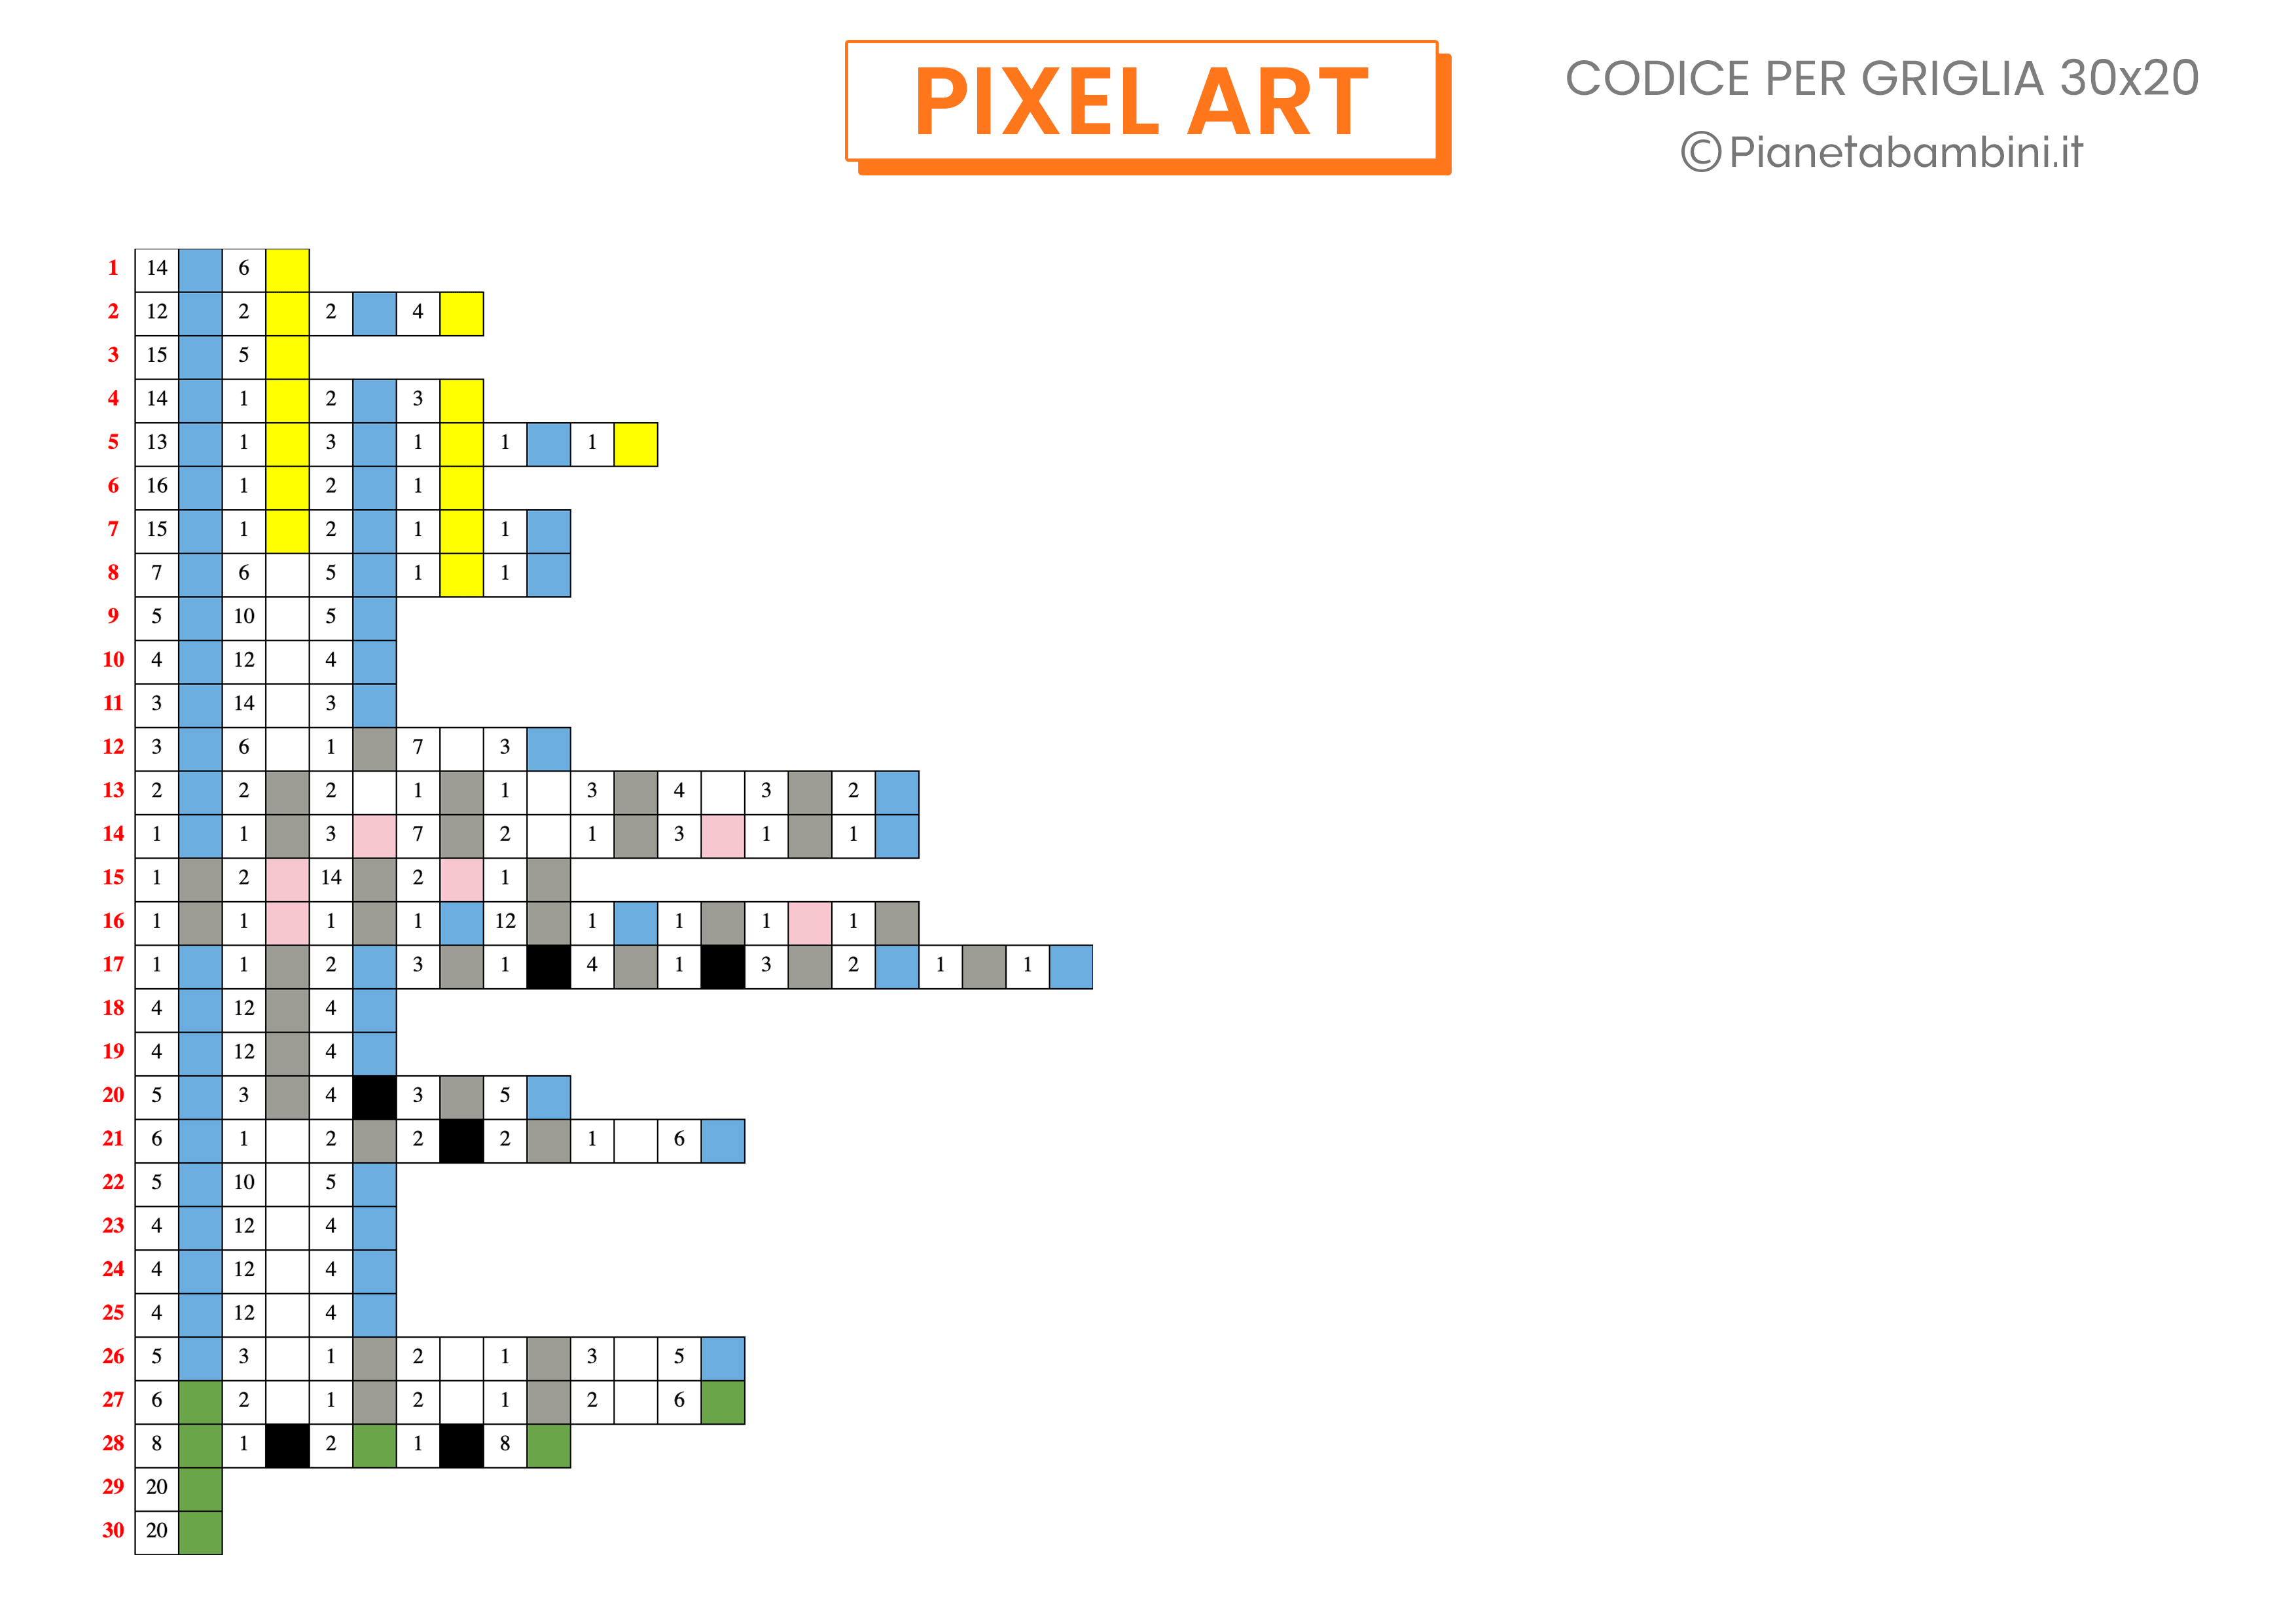 Pixel Art Pasqua Codice Difficile 03